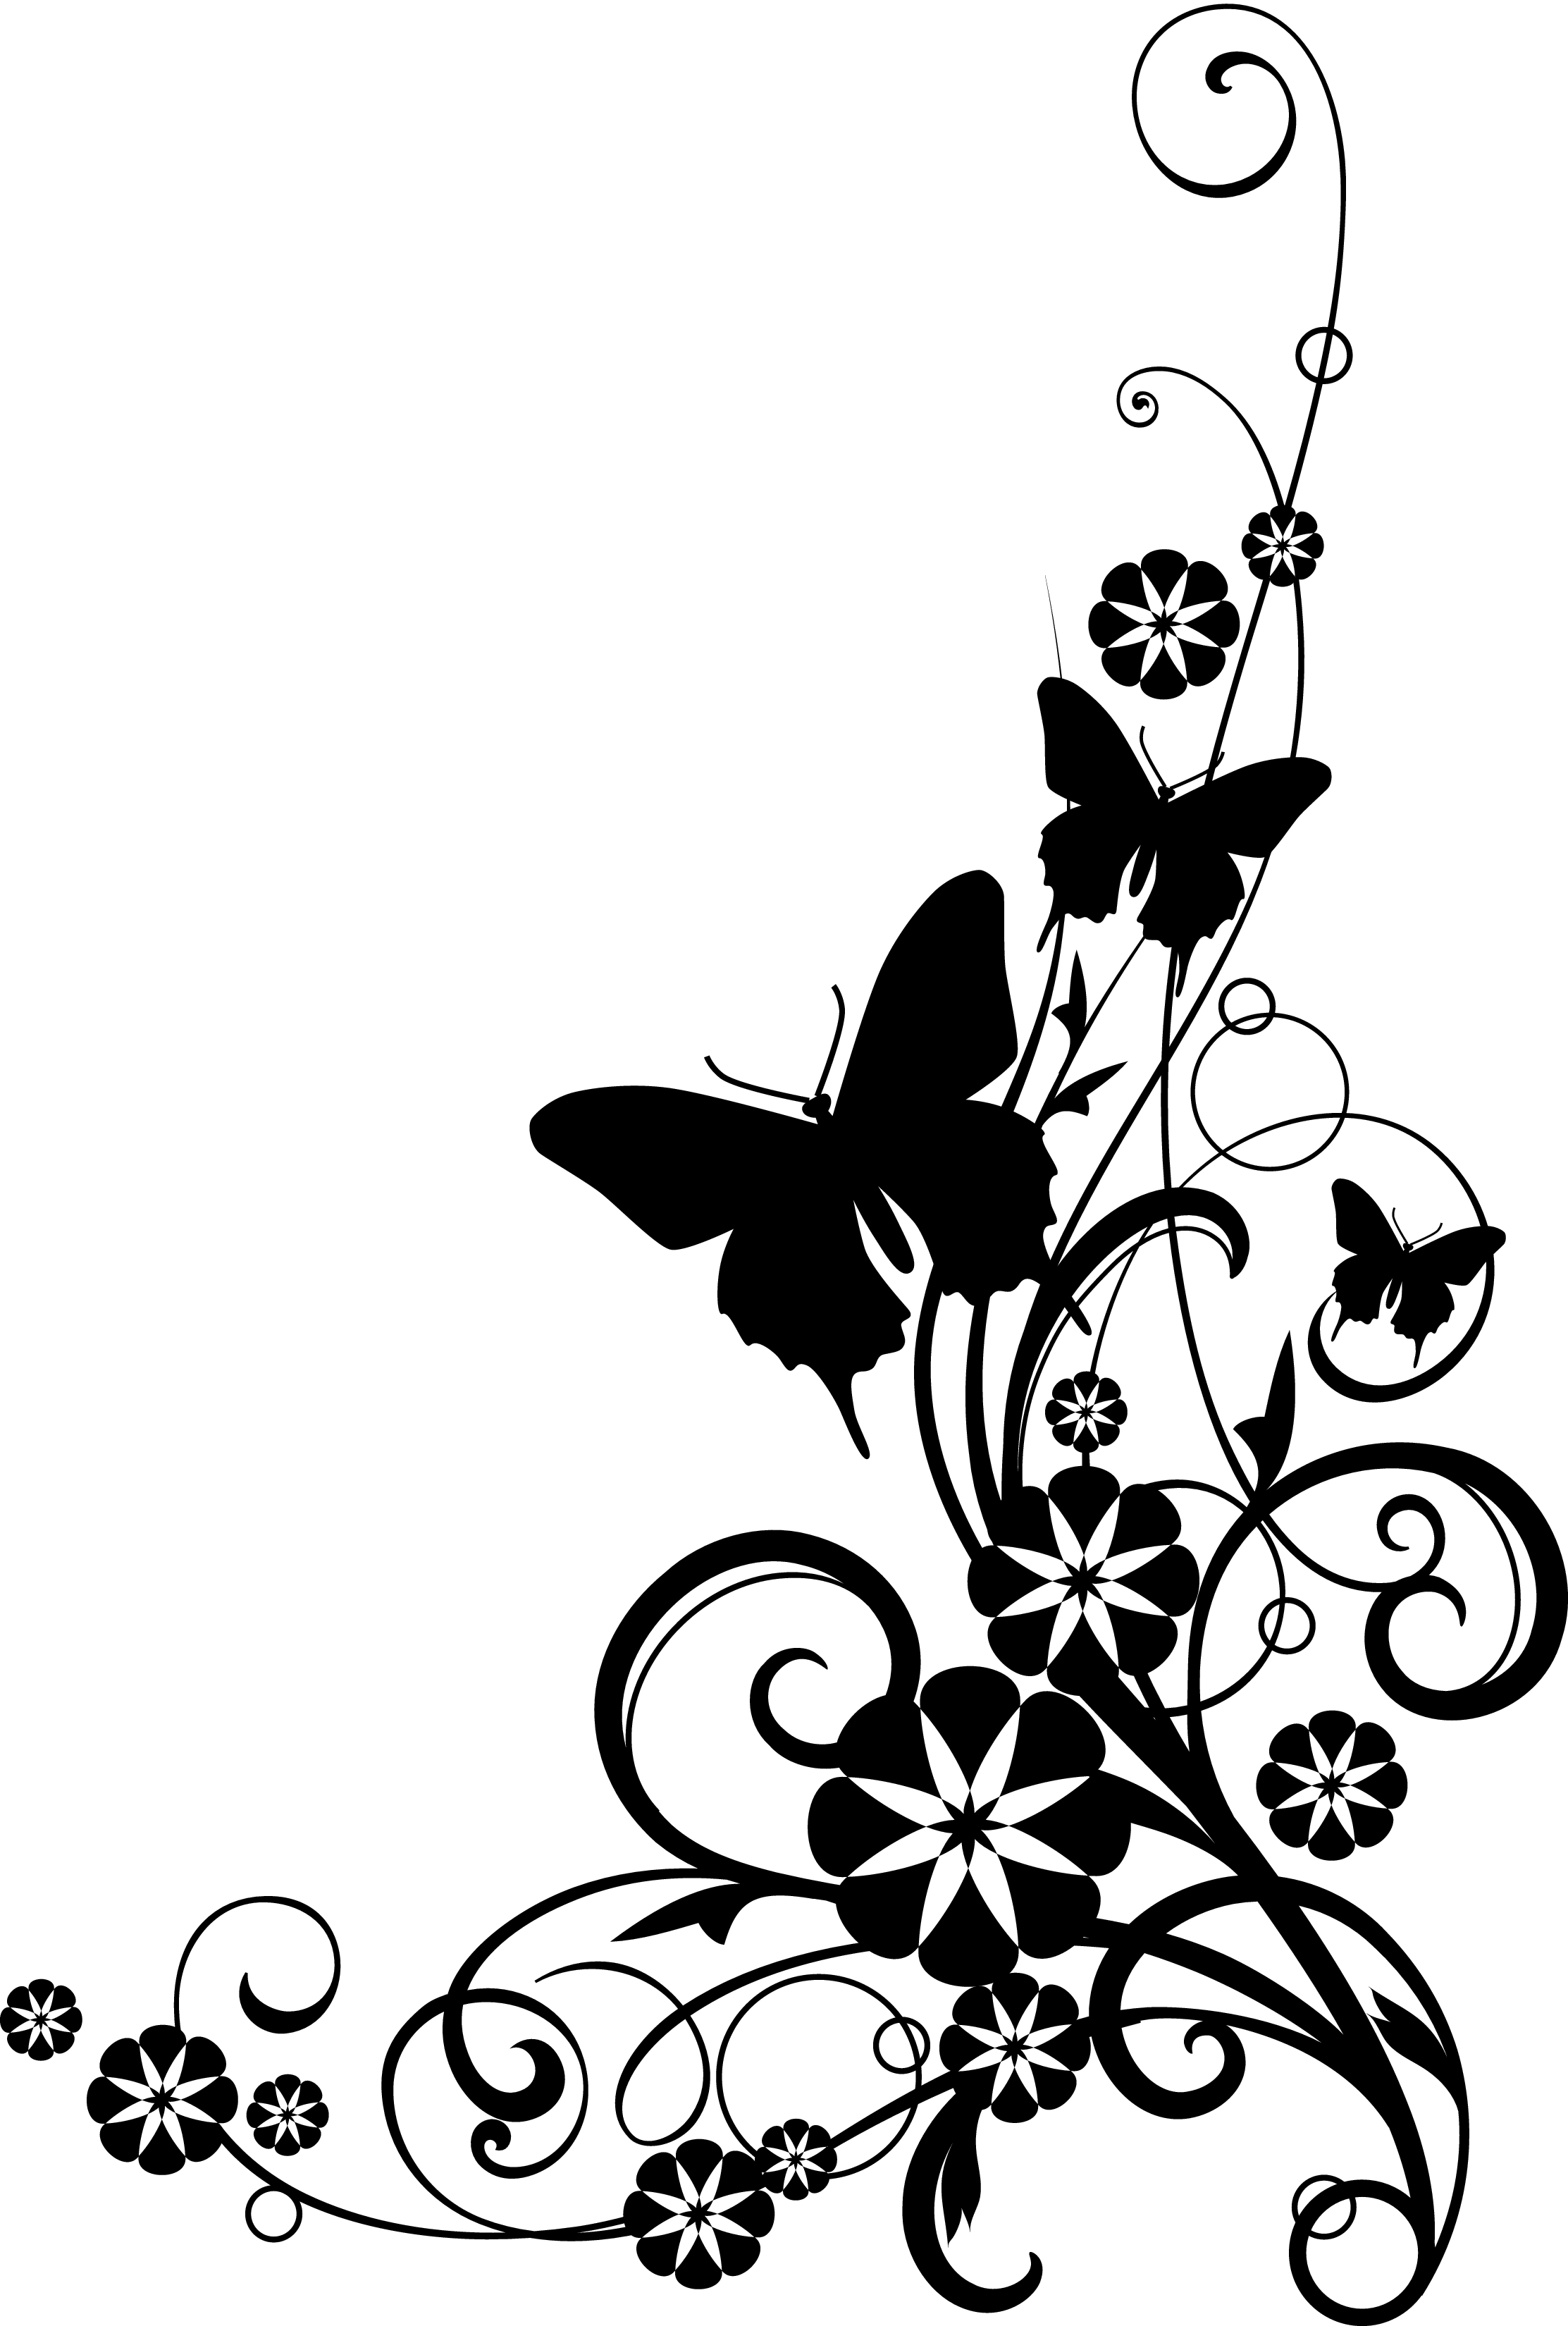 Clip Art Flowers Black And White Border - ClipArt Best